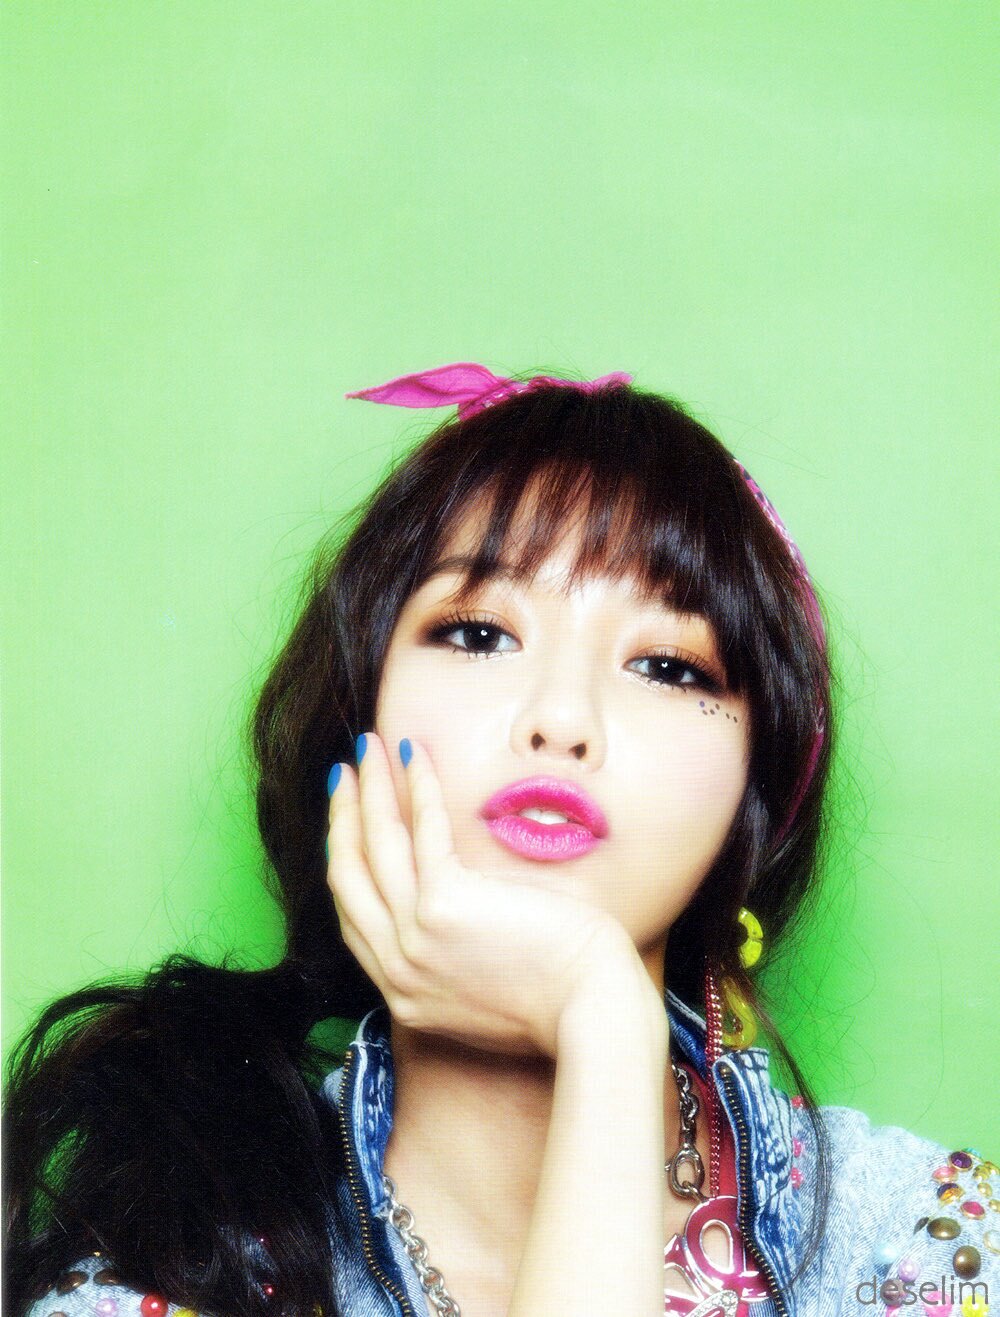 Choi Soo Young Korean beauty photo wallpaper 13 Preview | 10wallpaper.com